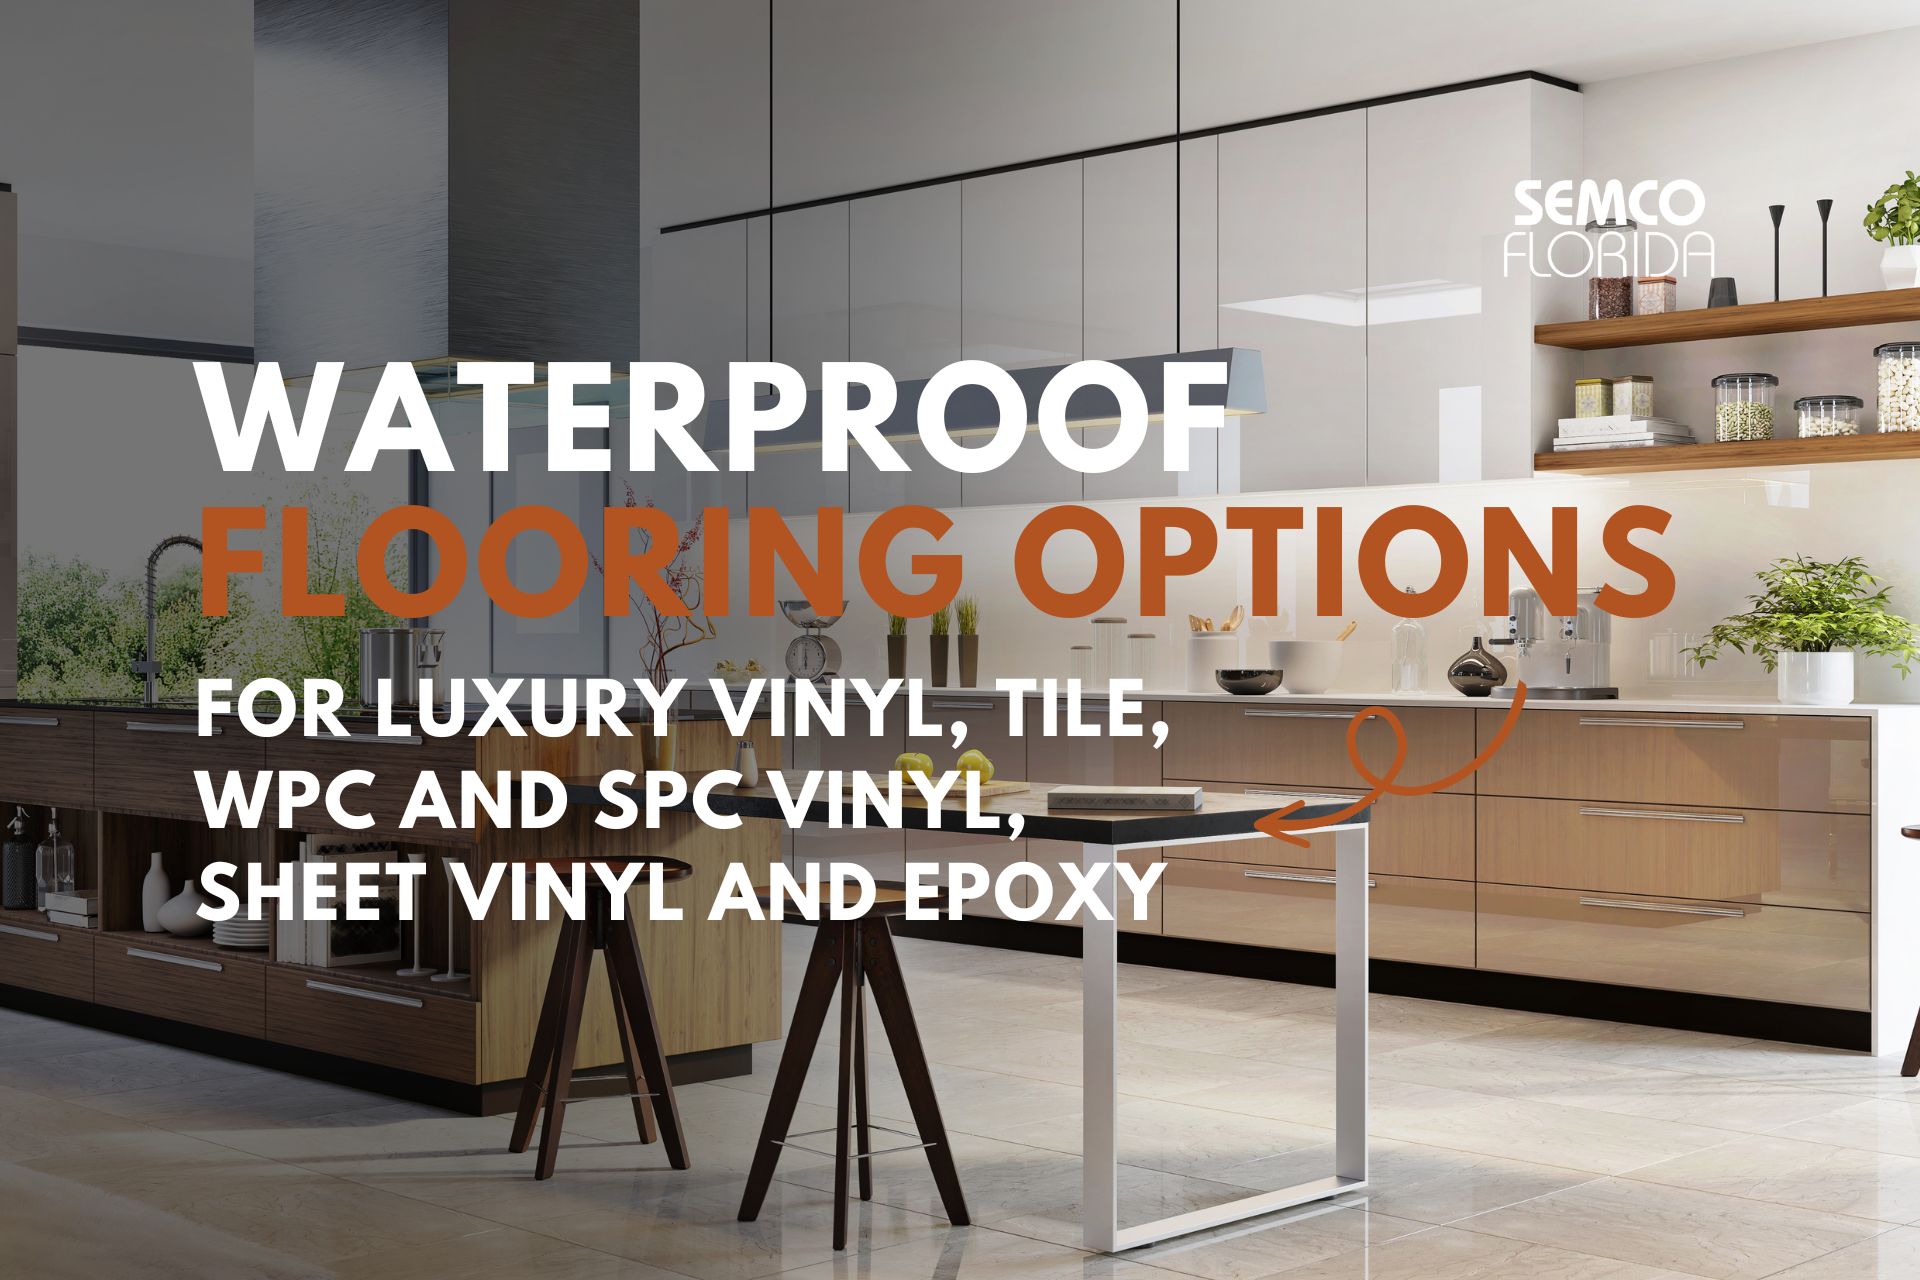 waterproof-flooring-options-luxury-vinyl-tile-wpc-spc-vinyl-sheet-vinyl-epoxy